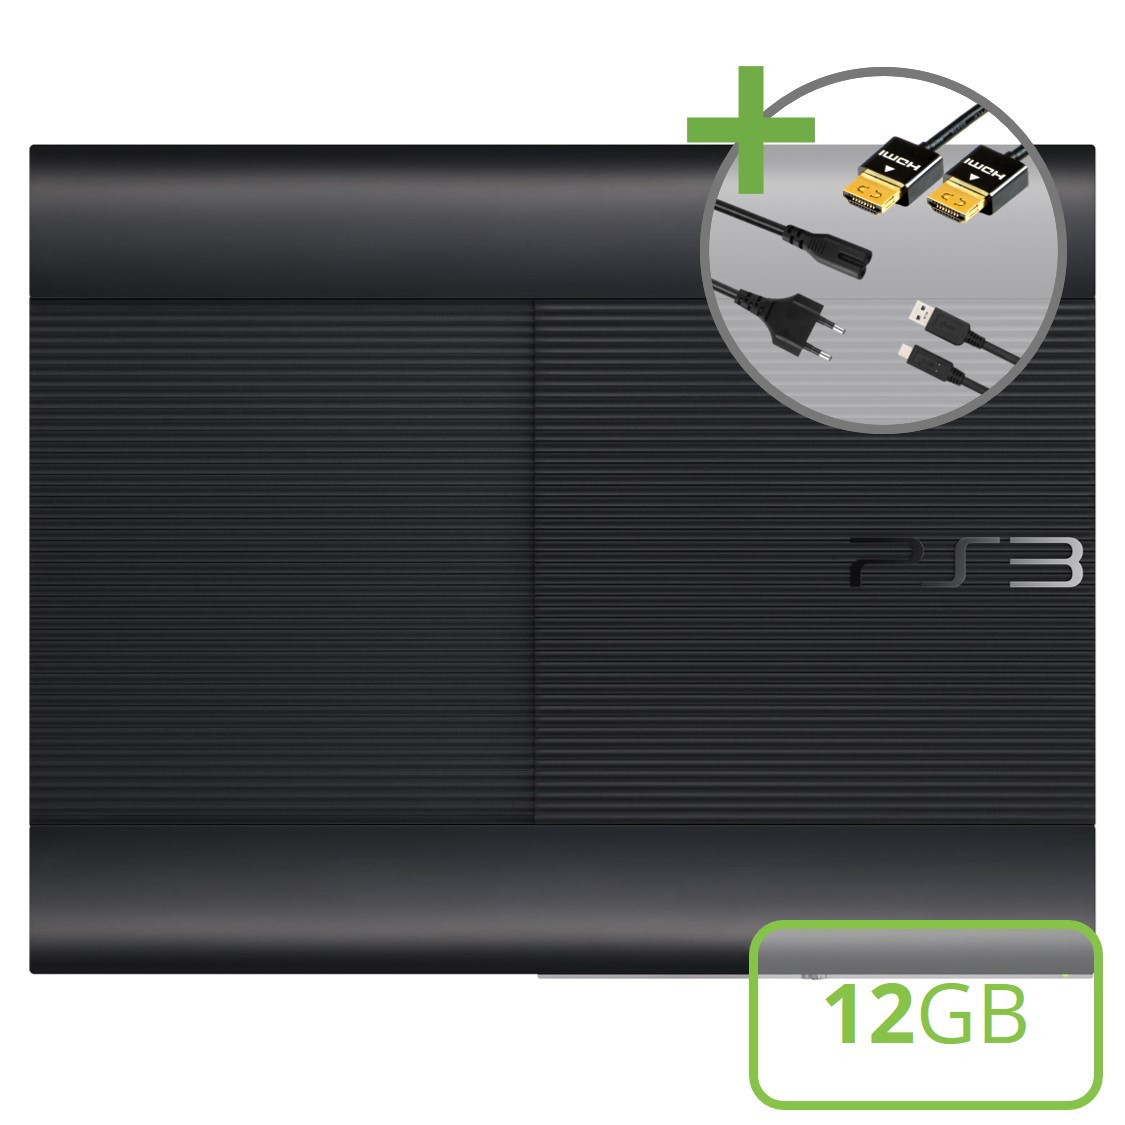 Sony PlayStation 3 Super Slim (12GB) Starter Pack - DualShock Edition - Playstation 3 Hardware - 3